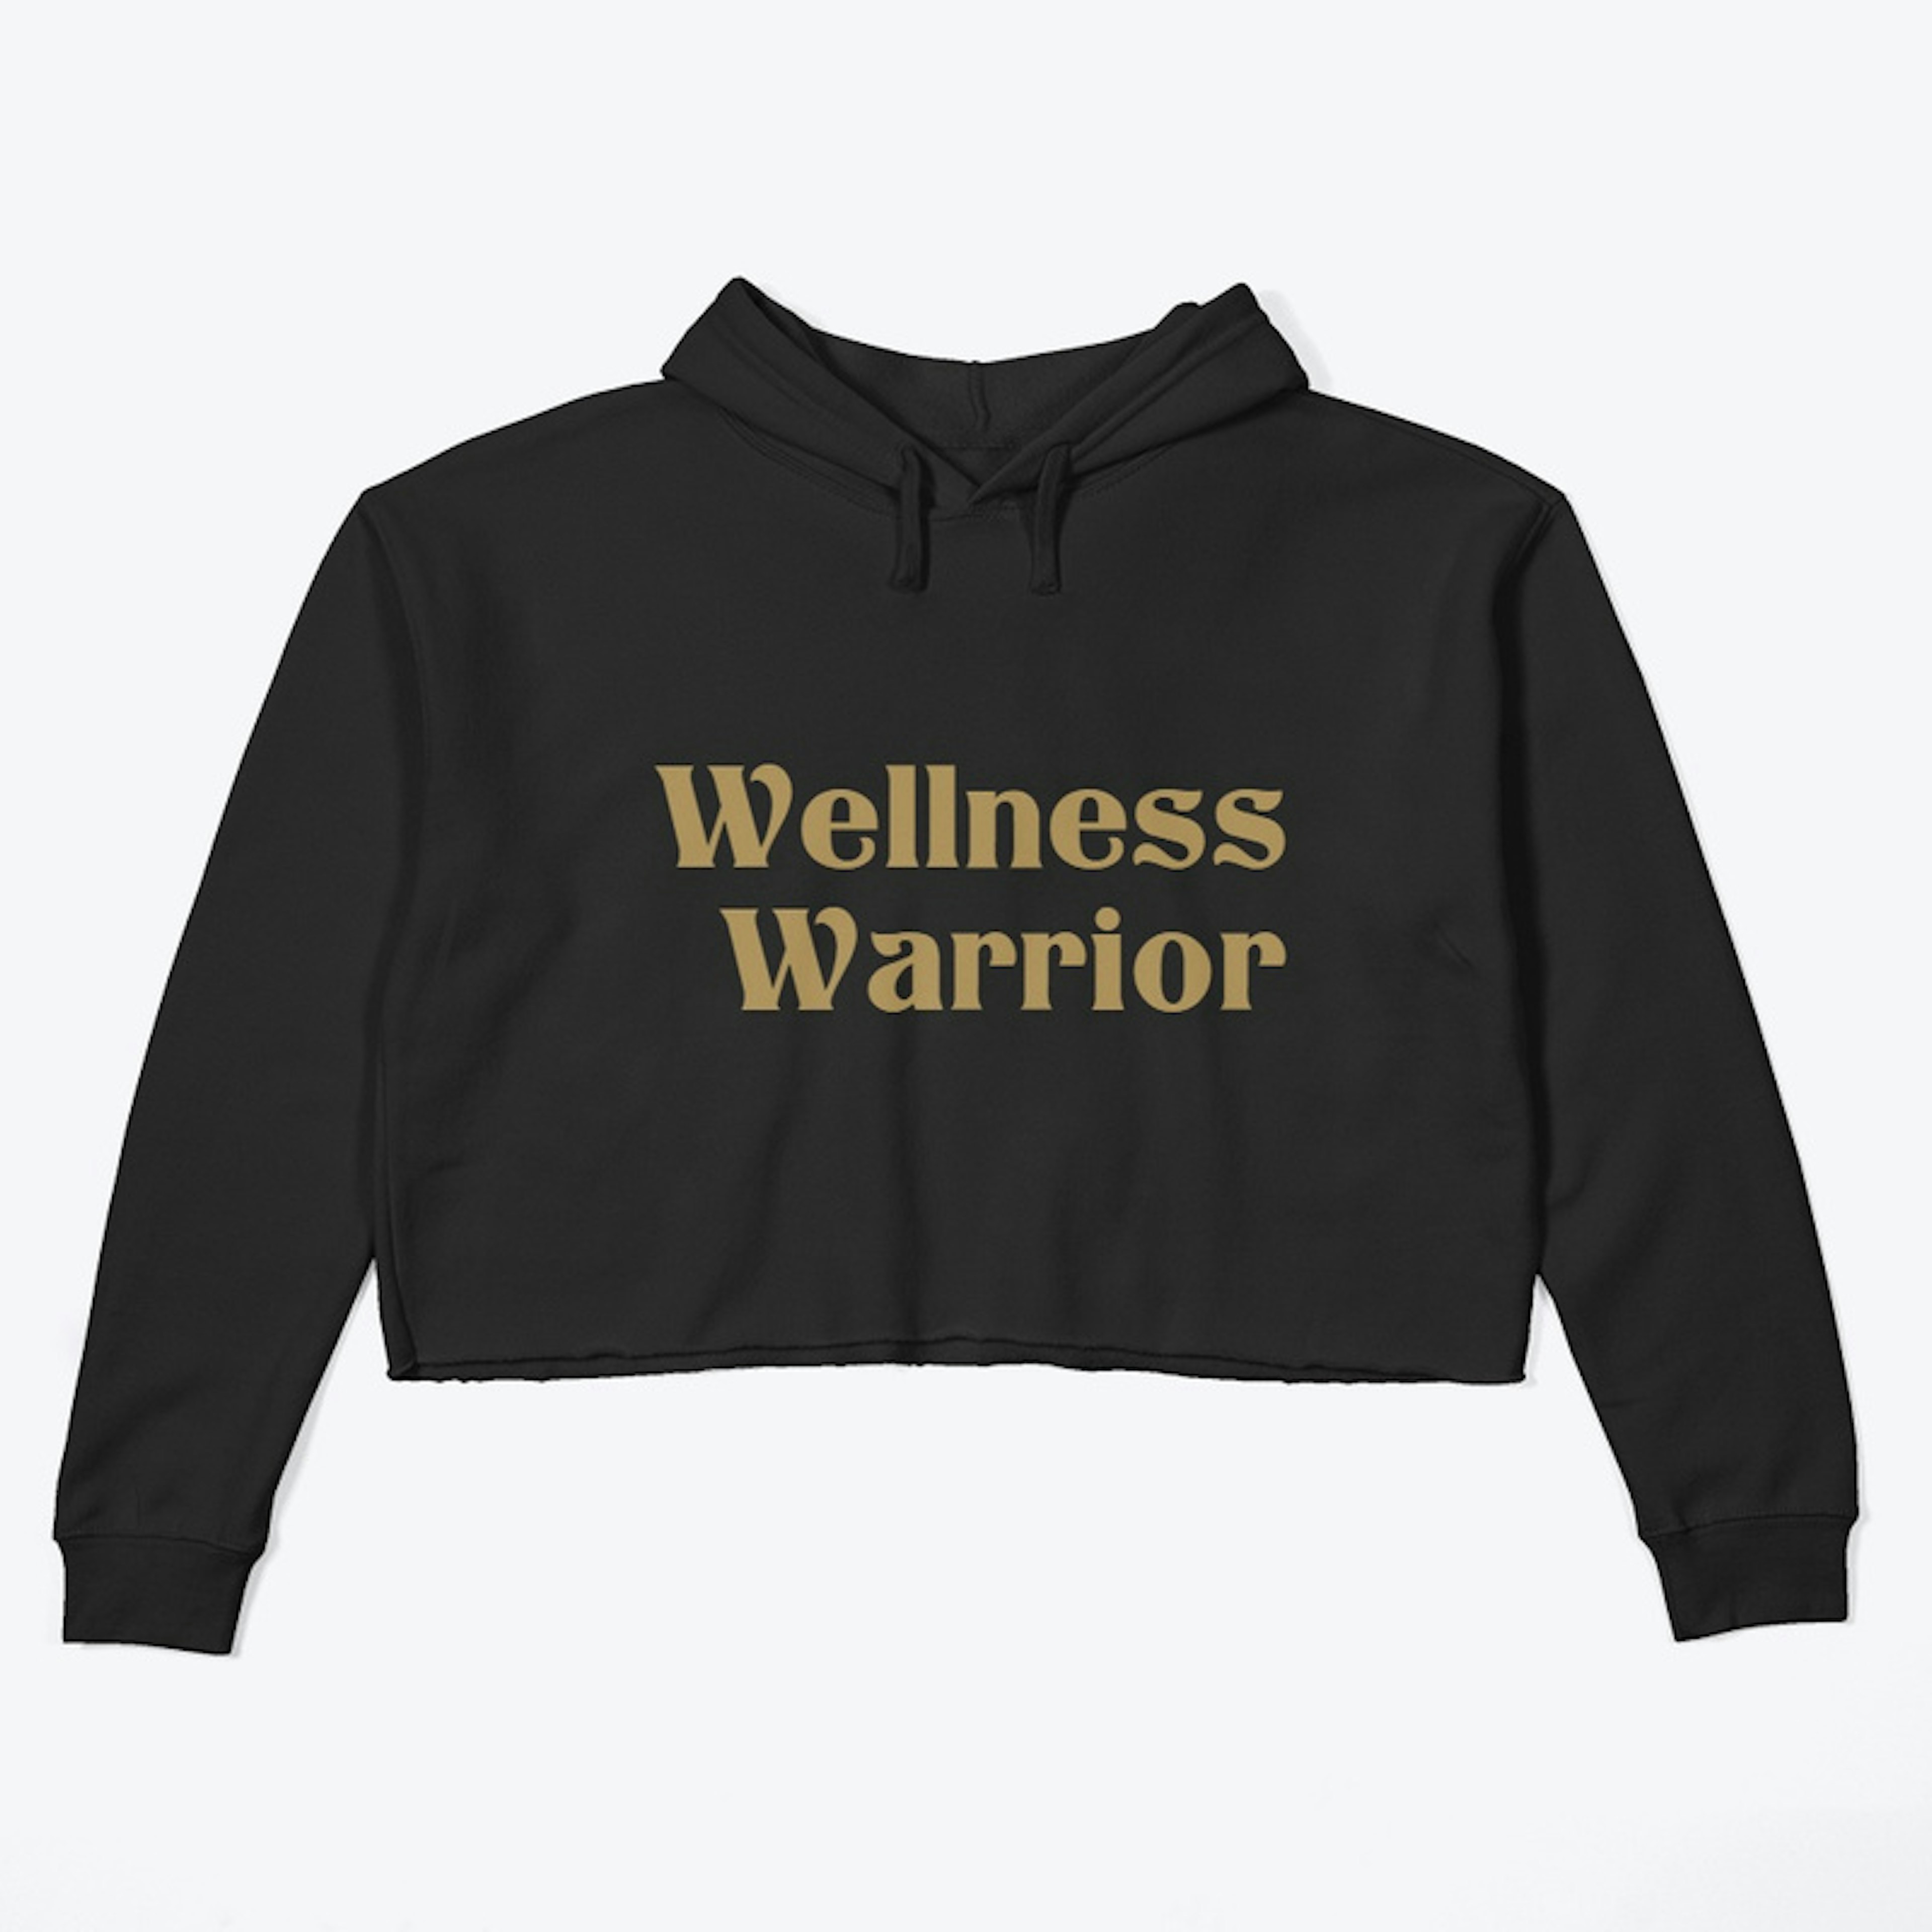 Warriors of Wellness